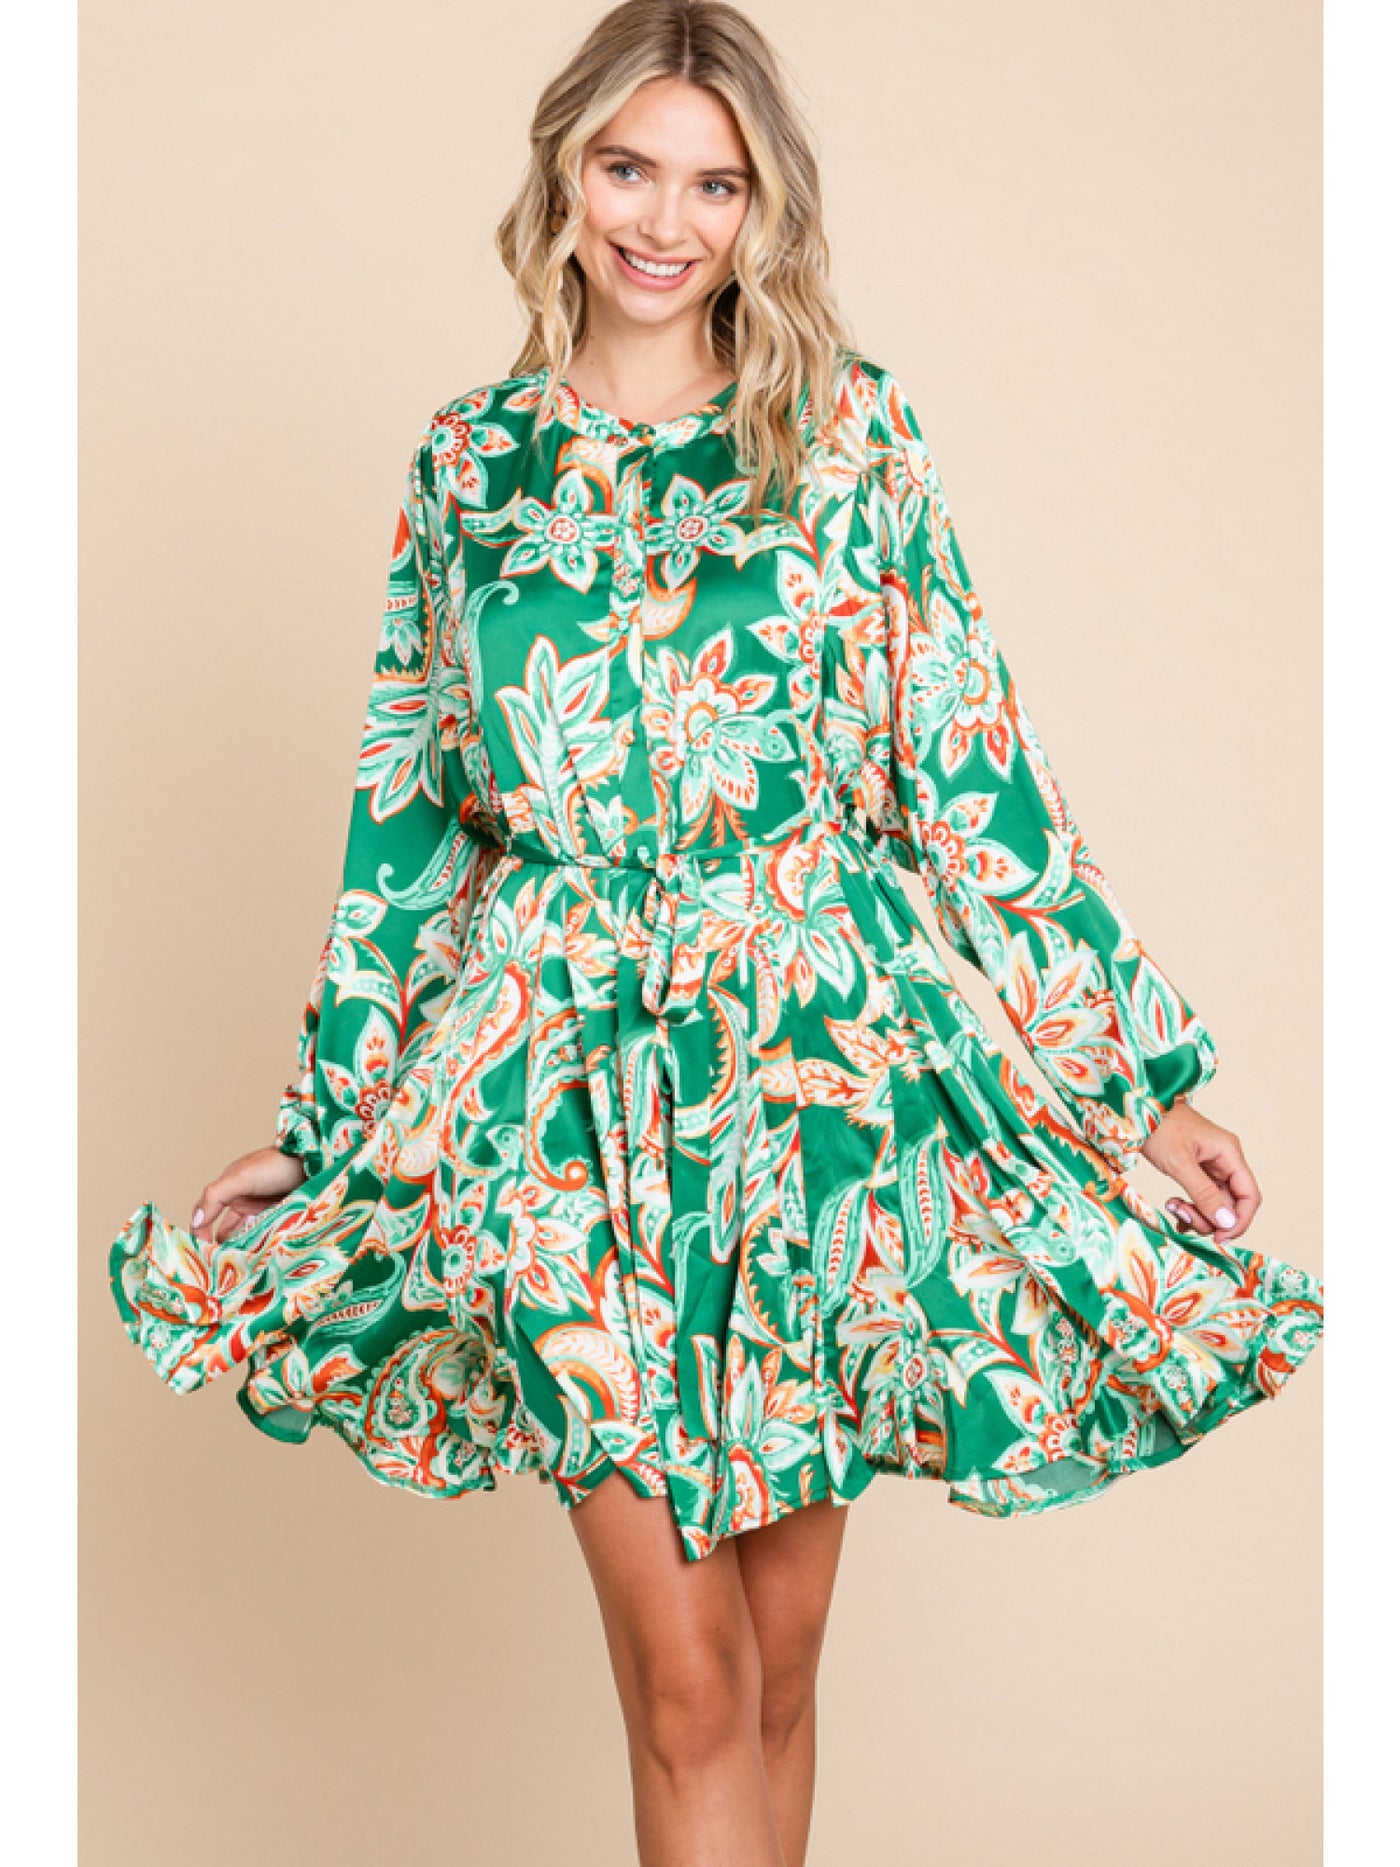 Pine Green Satin Paisley Print Dress with Round Neck